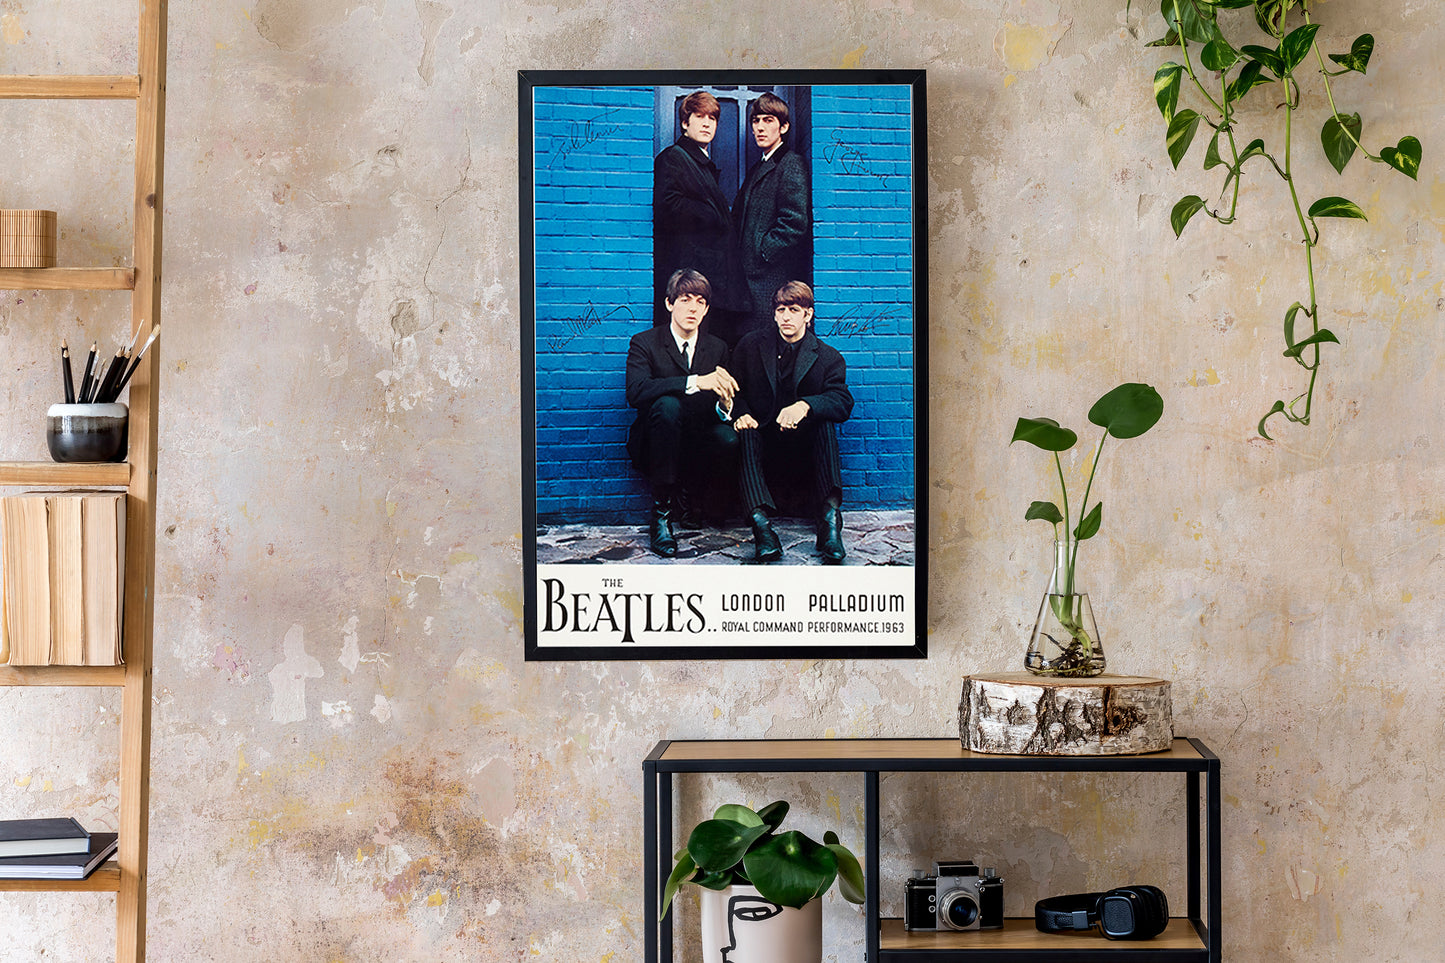 The Beatles London Palladium